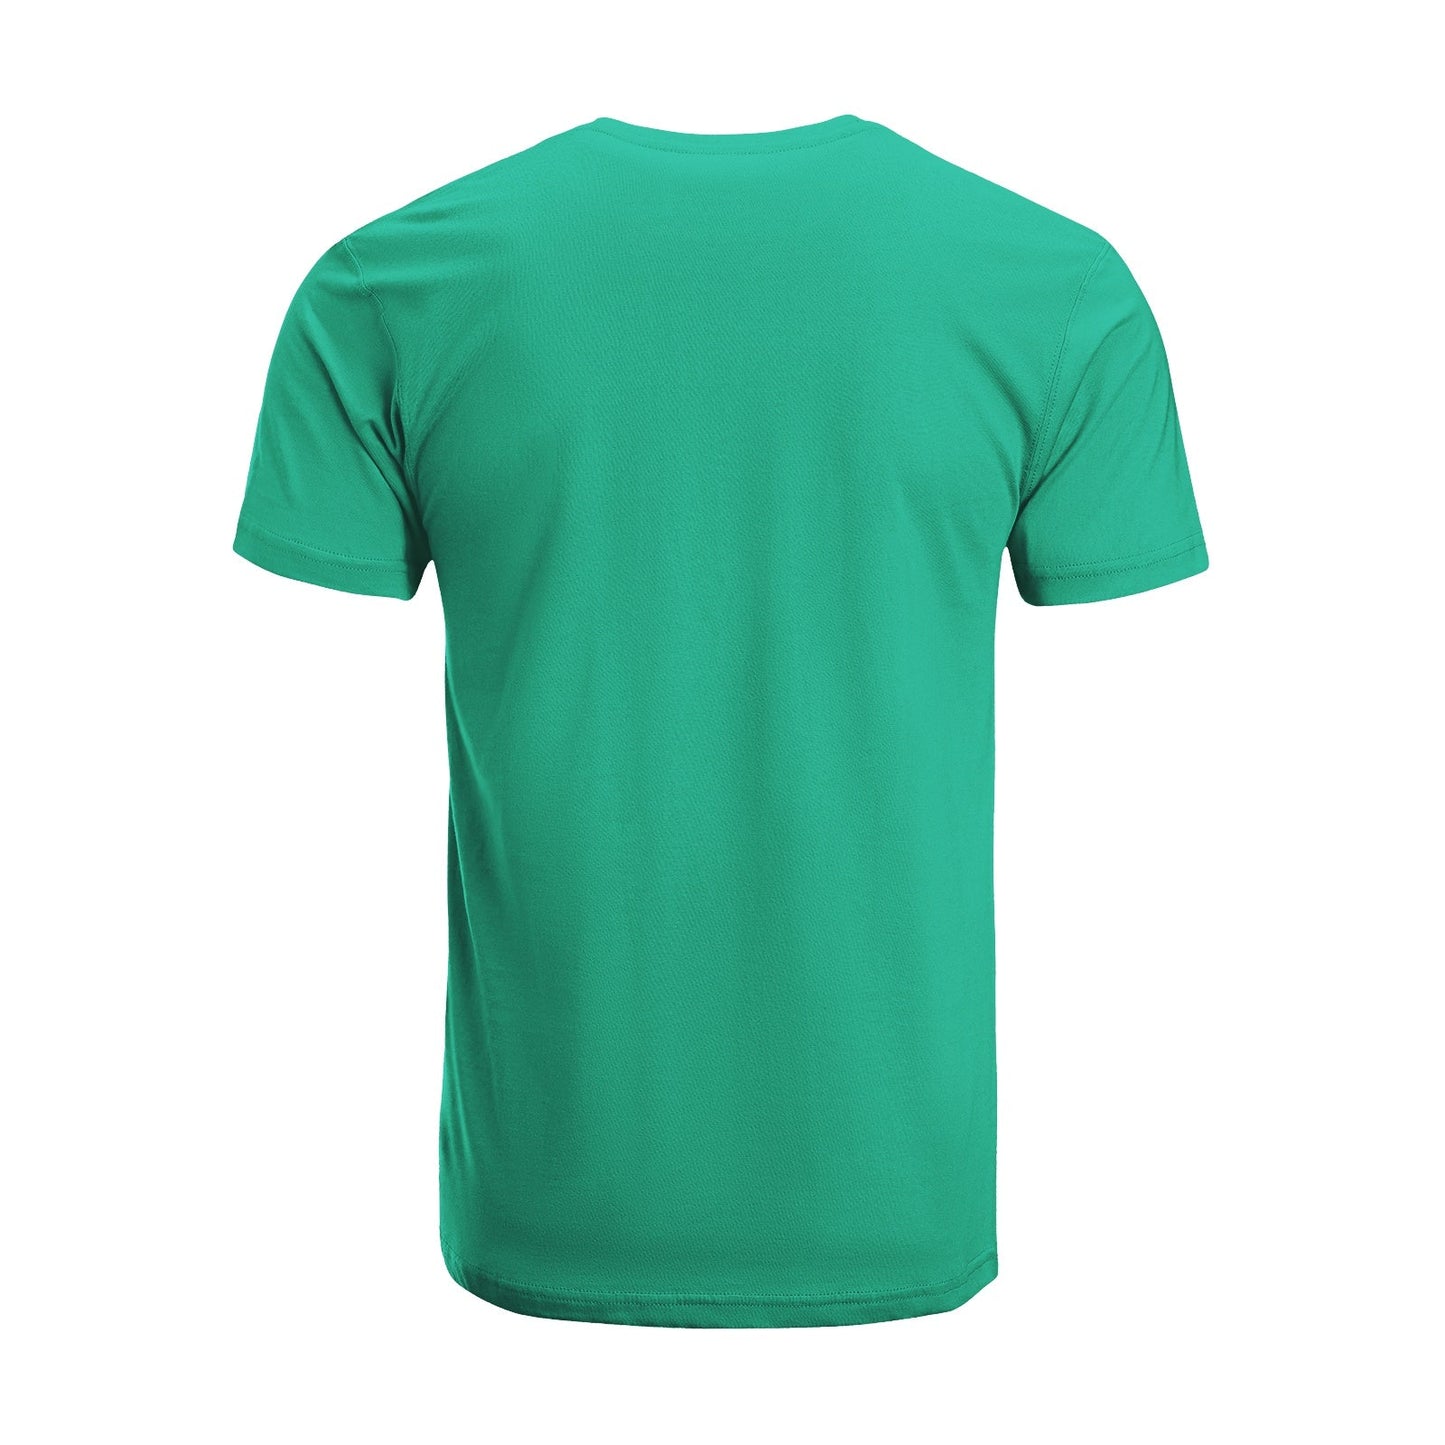 Unisex Short Sleeve Crew Neck Cotton Jersey T-Shirt USA 07